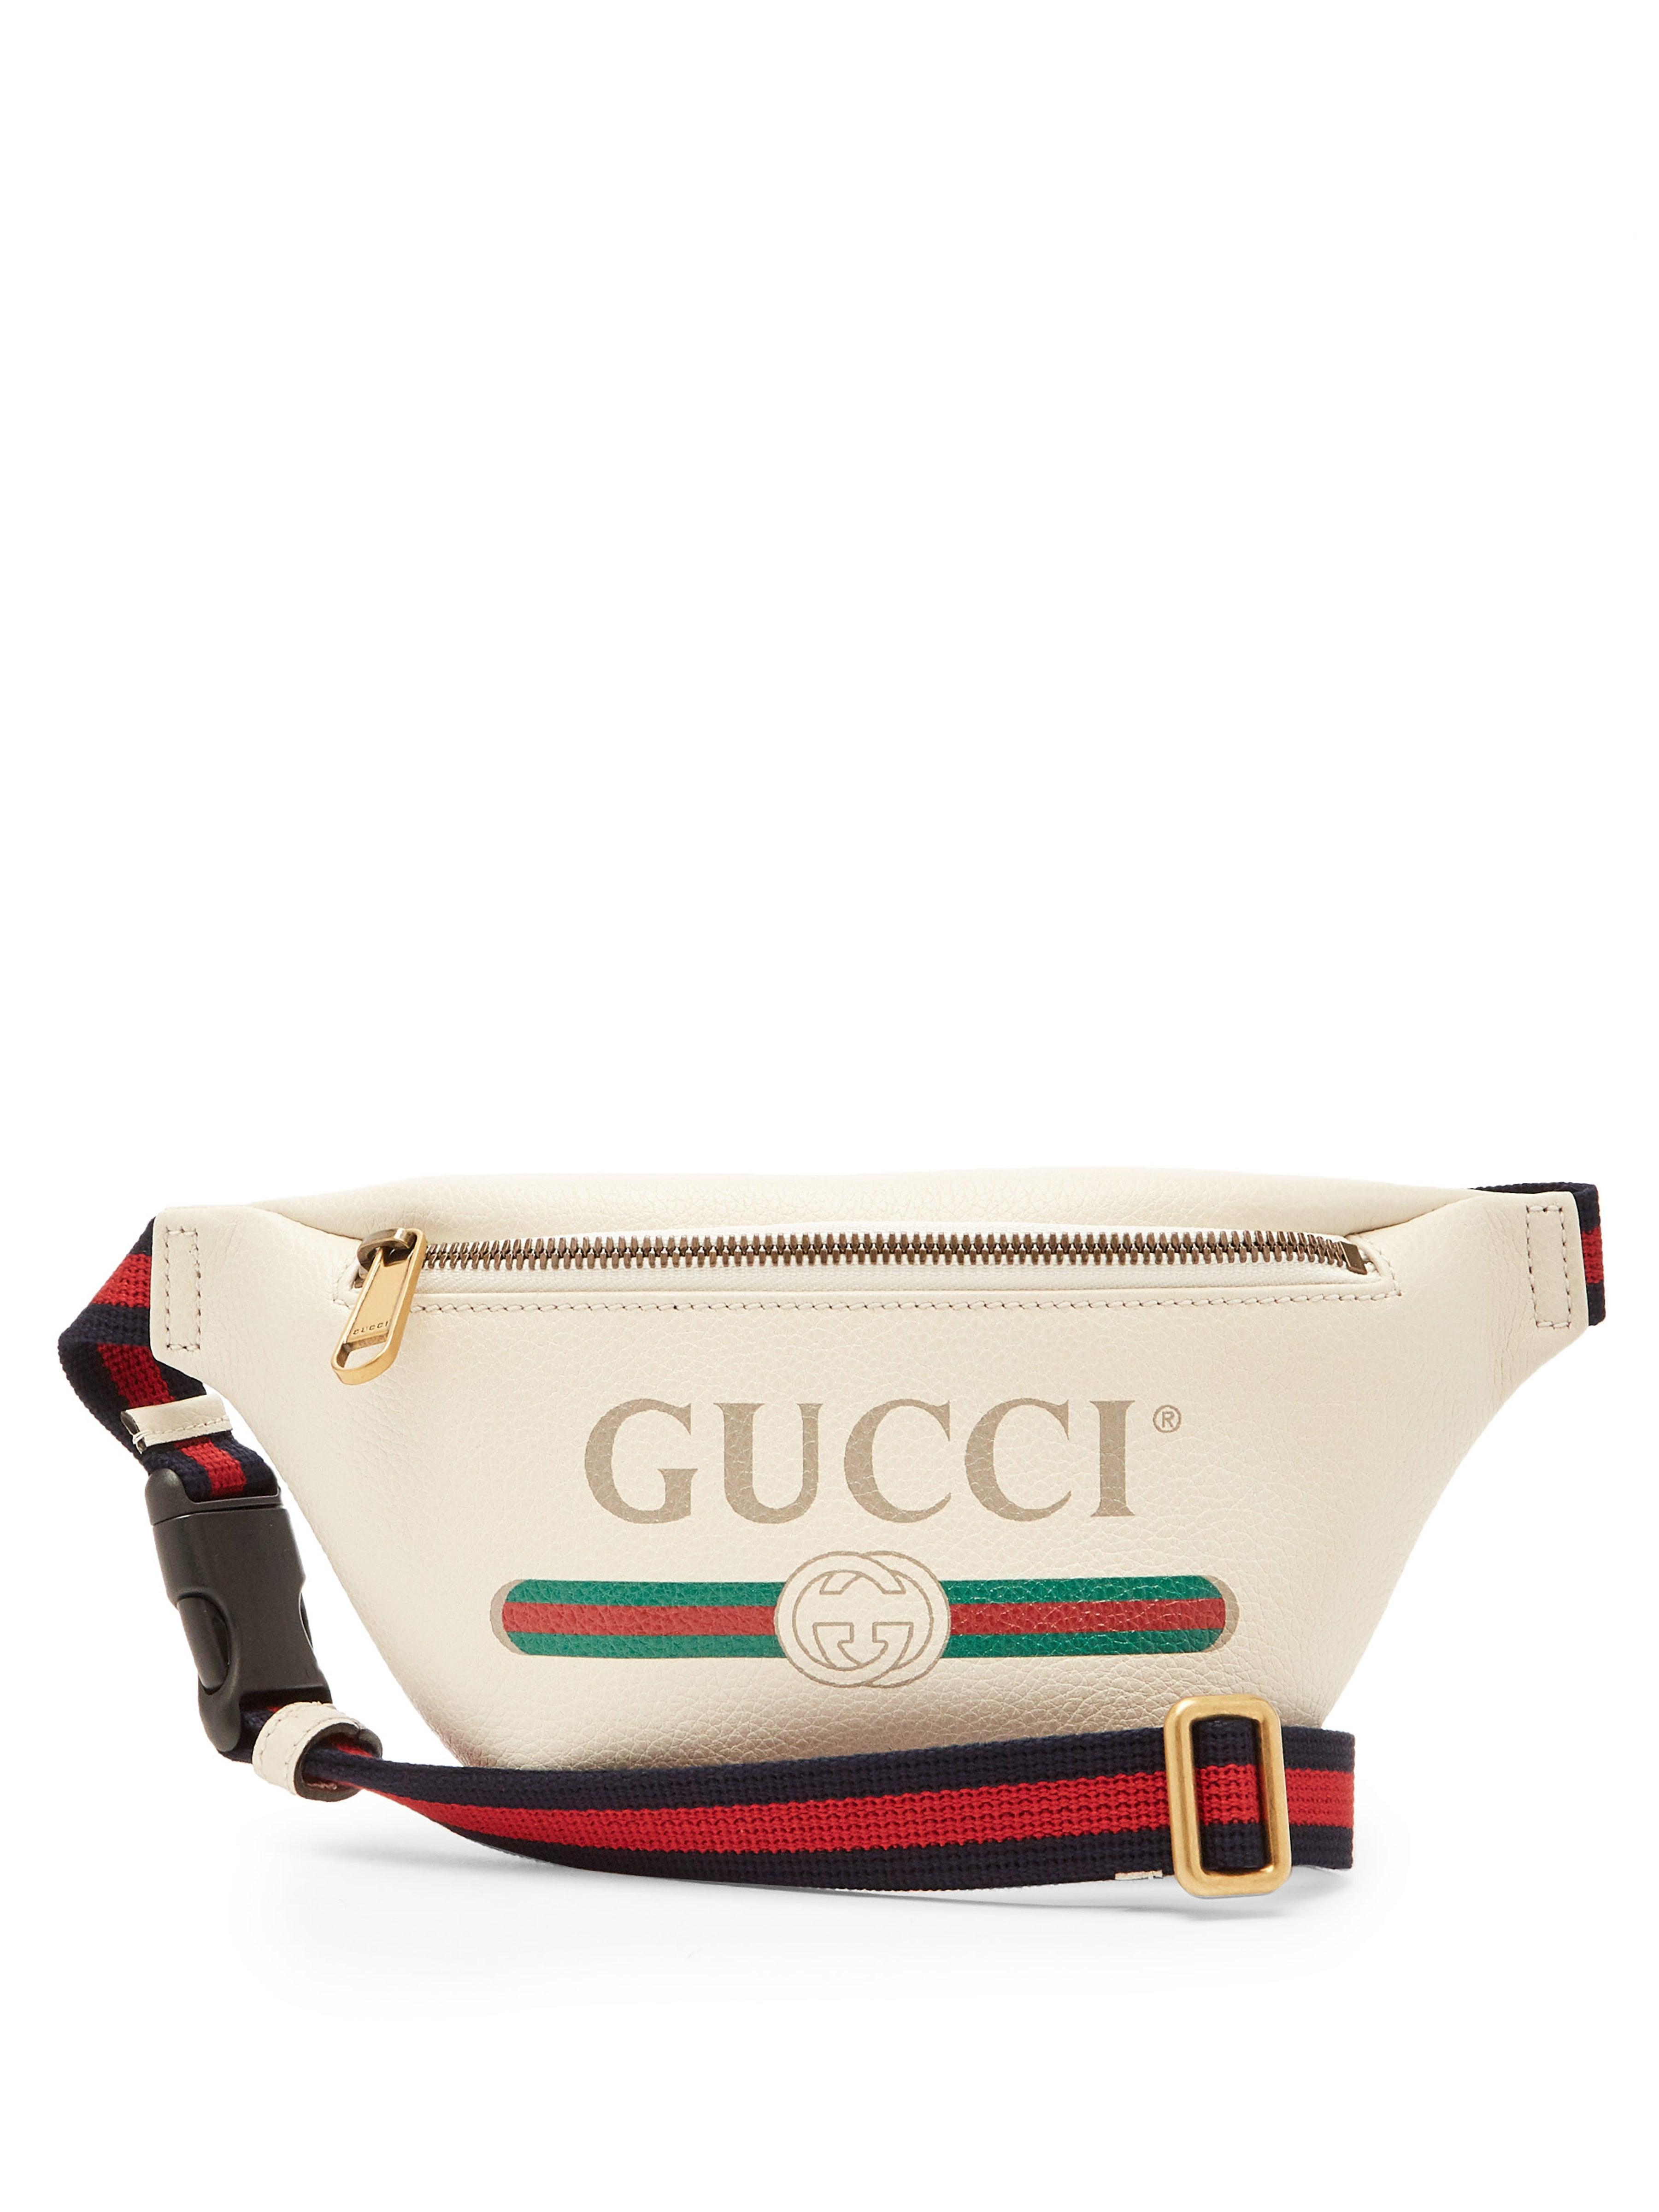 Gucci Men's Side Purse Handbag | semashow.com